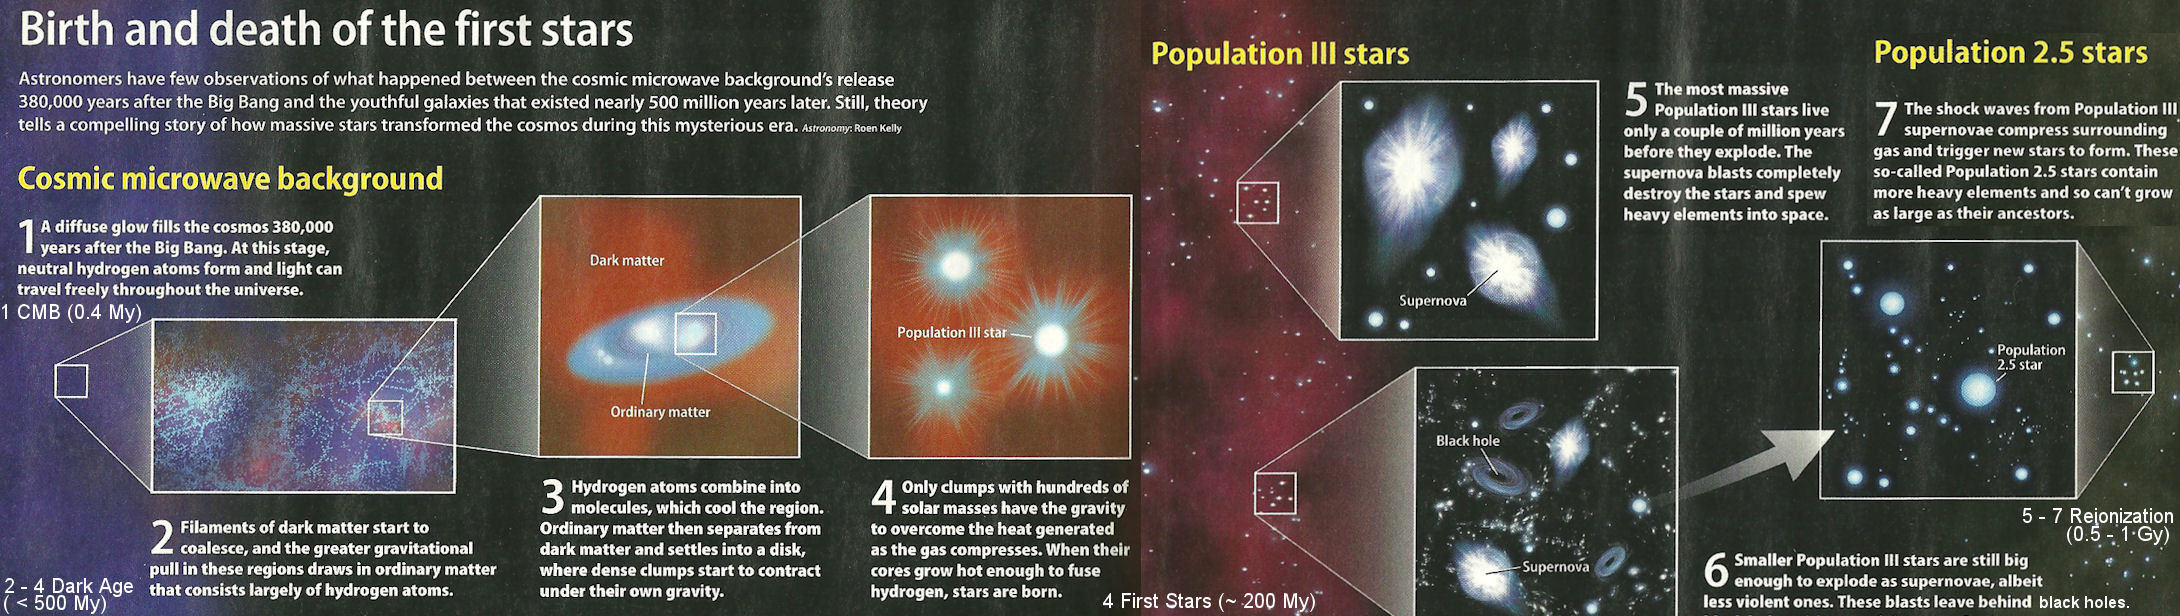 Evolution of First Stars